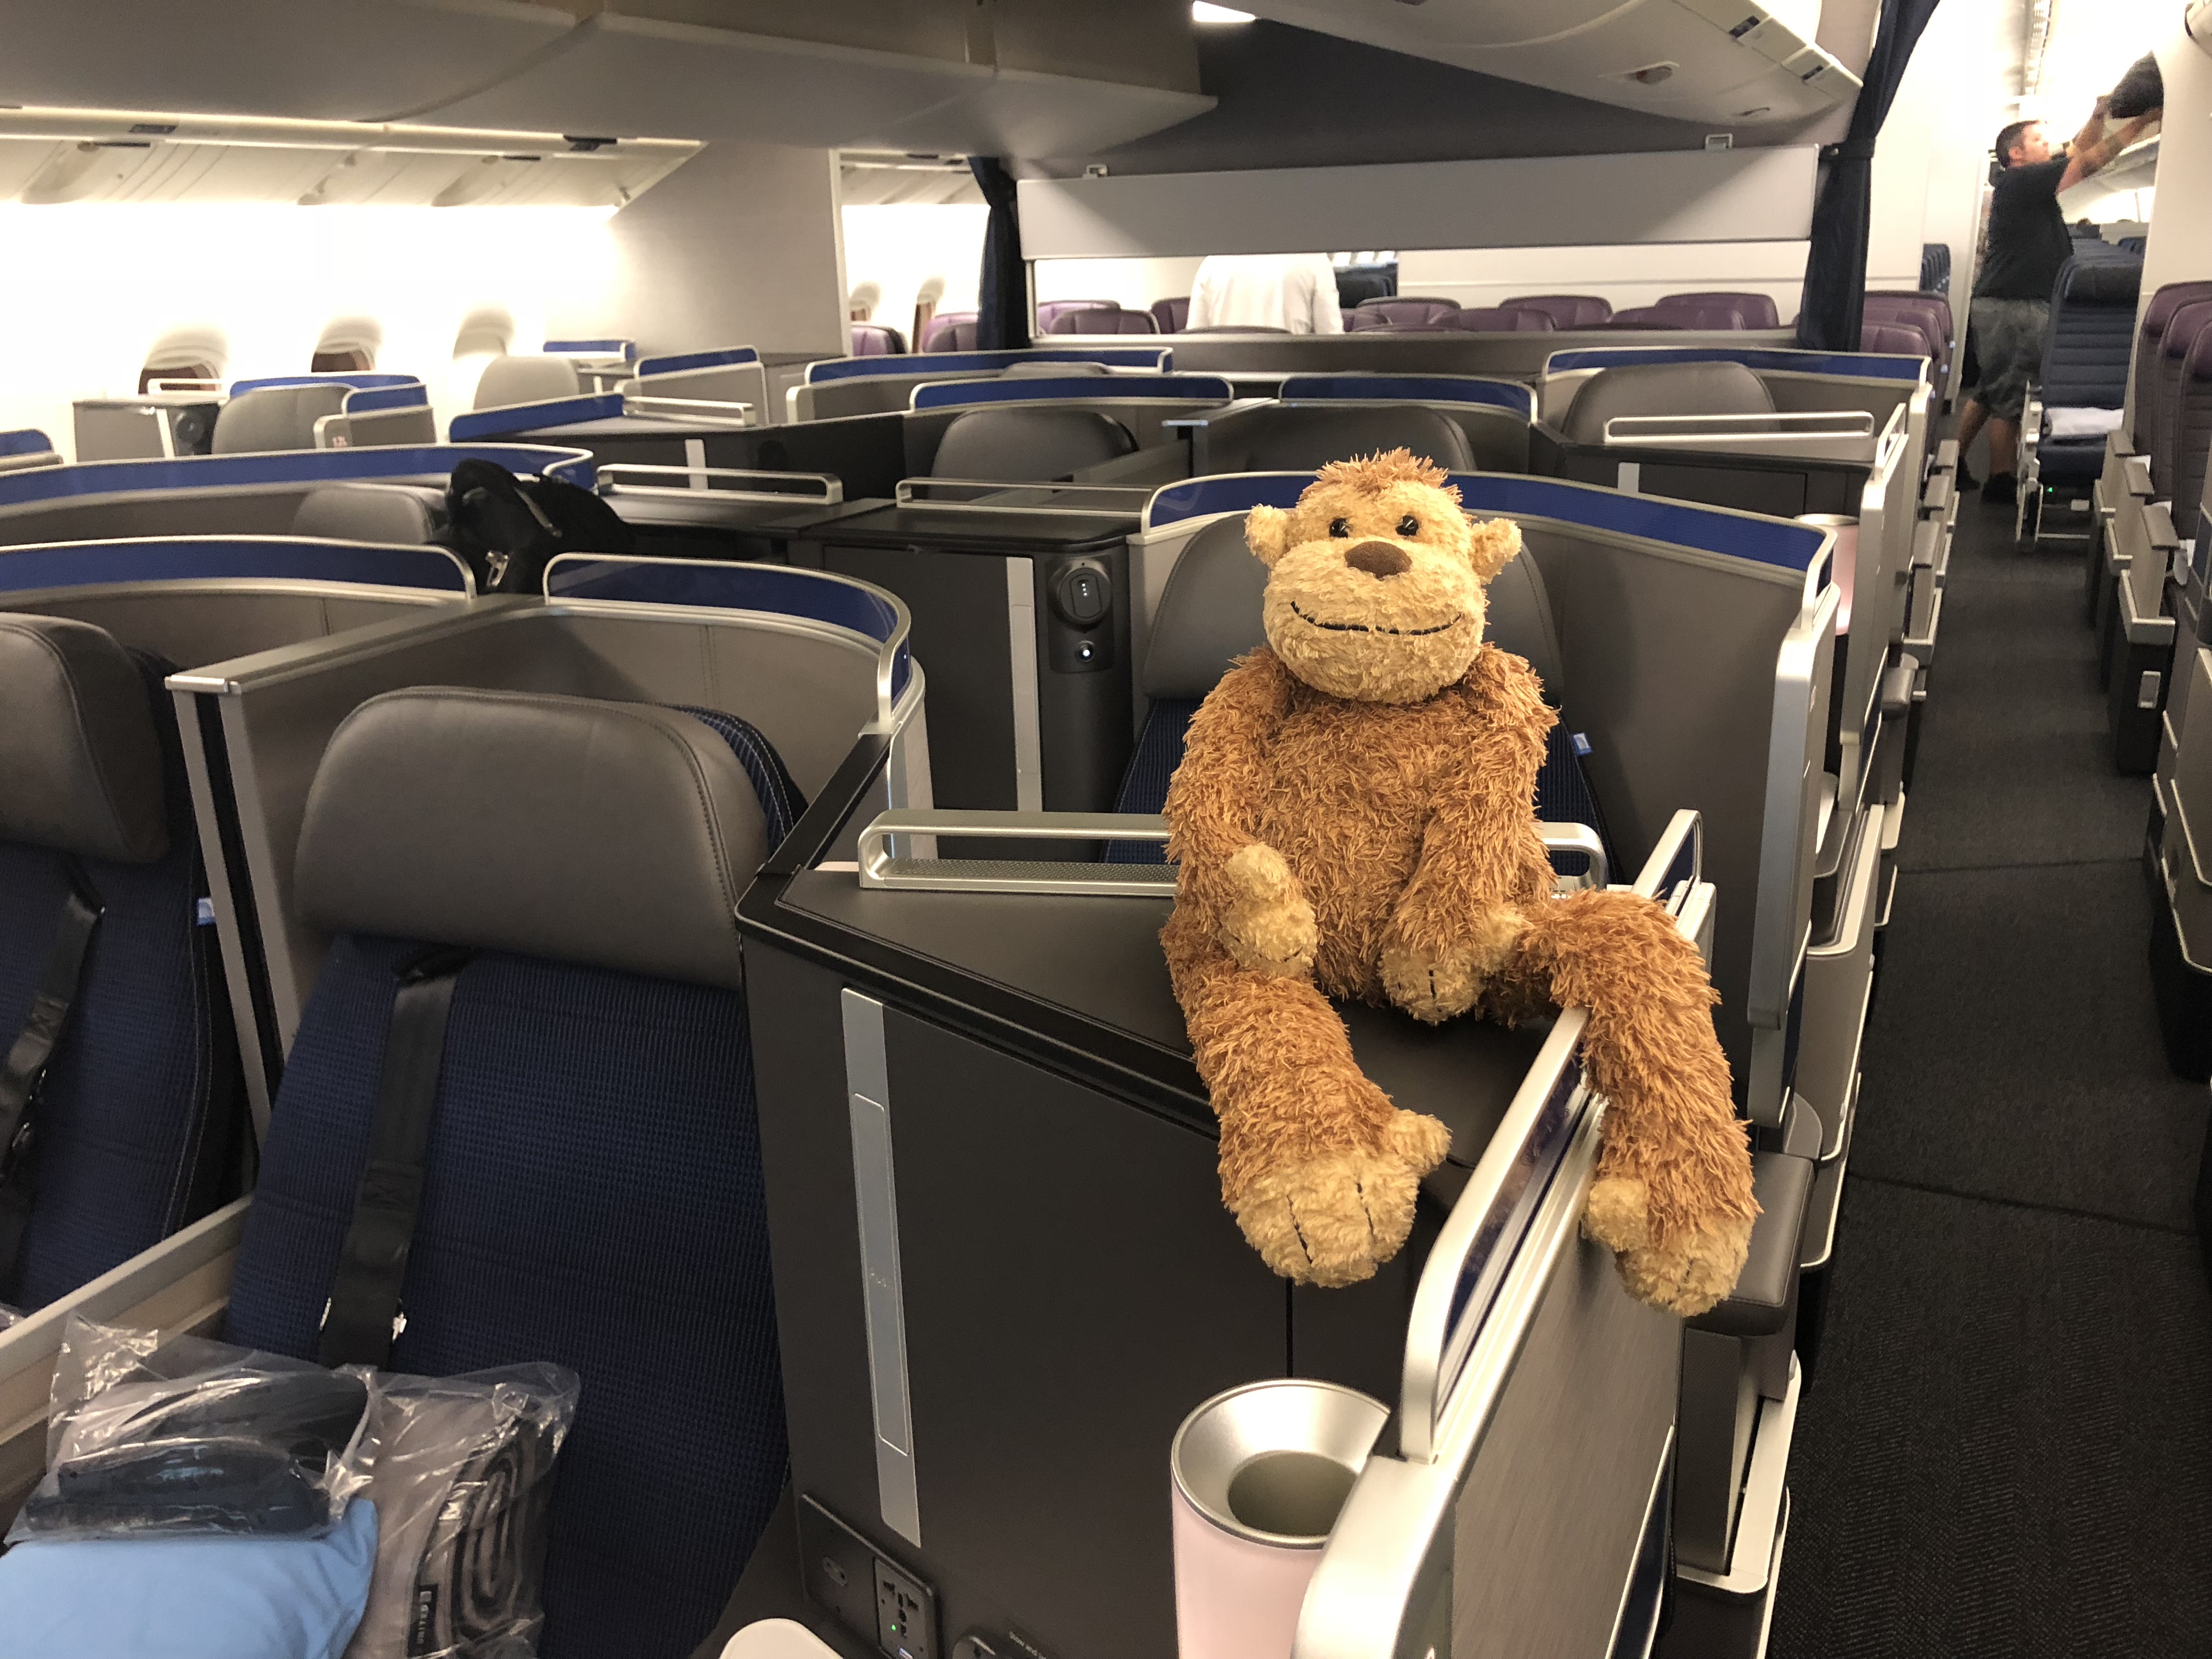 a stuffed animal on an airplane seat